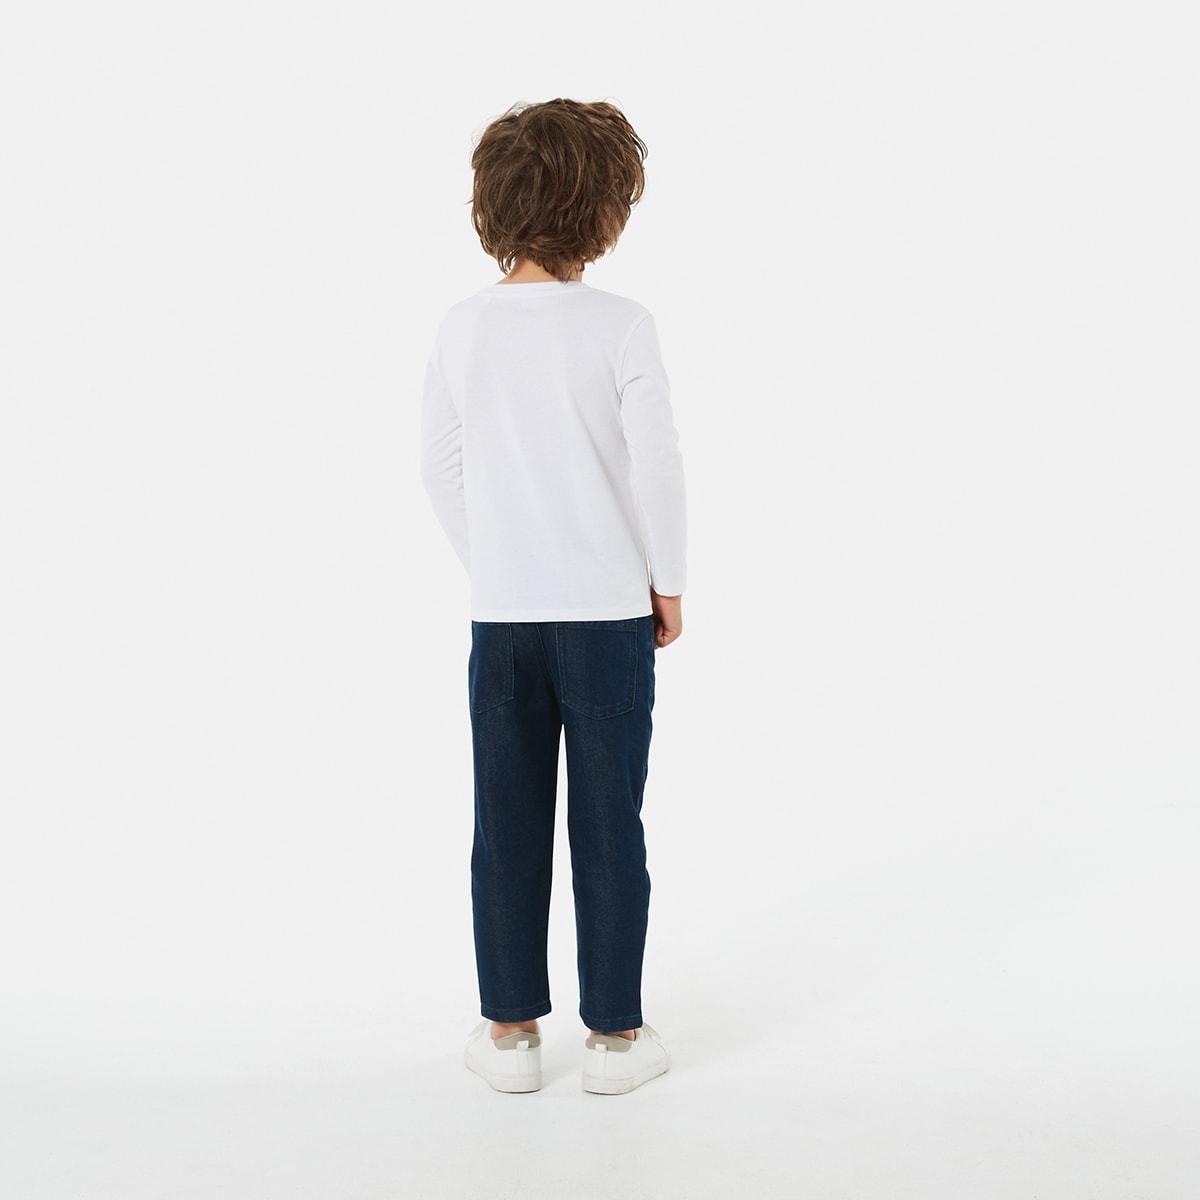 Basic Denim Jeans - Kmart